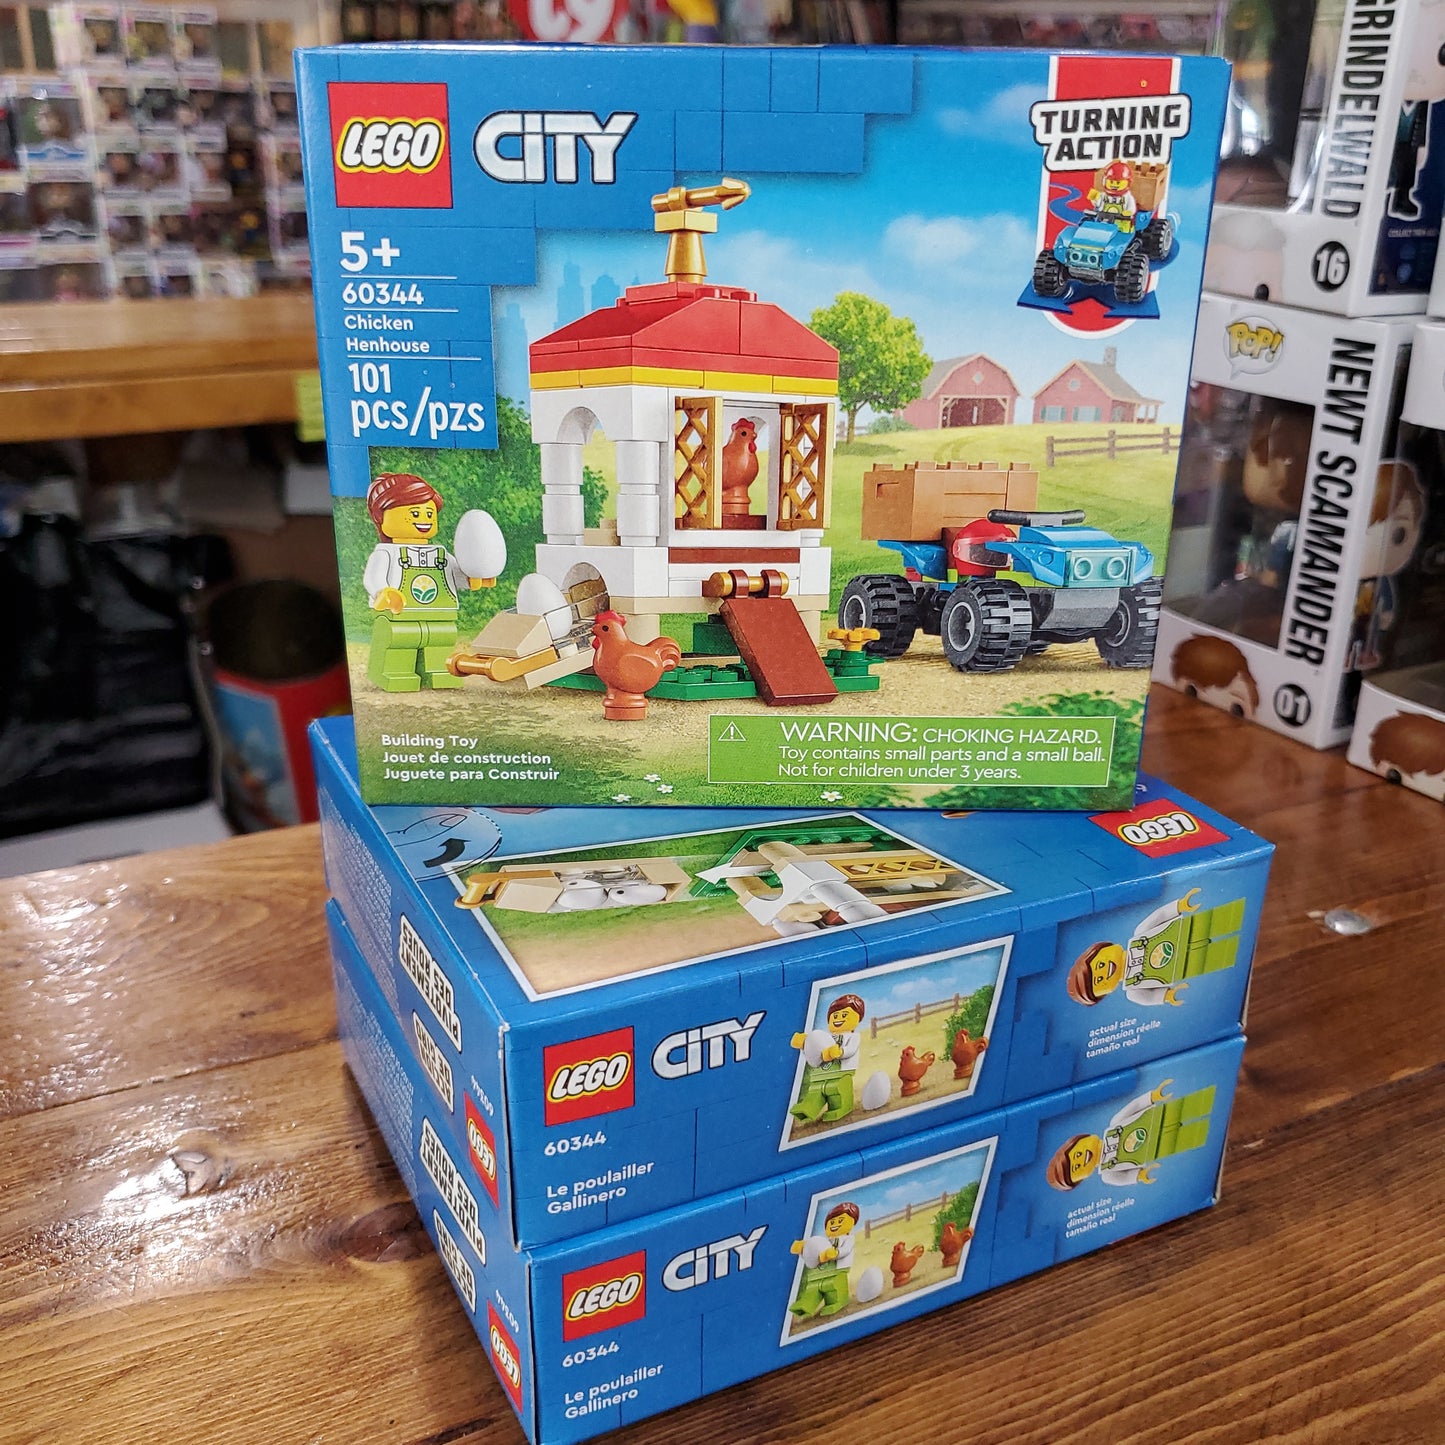 LEGO City - Chicken Henhouse 60344